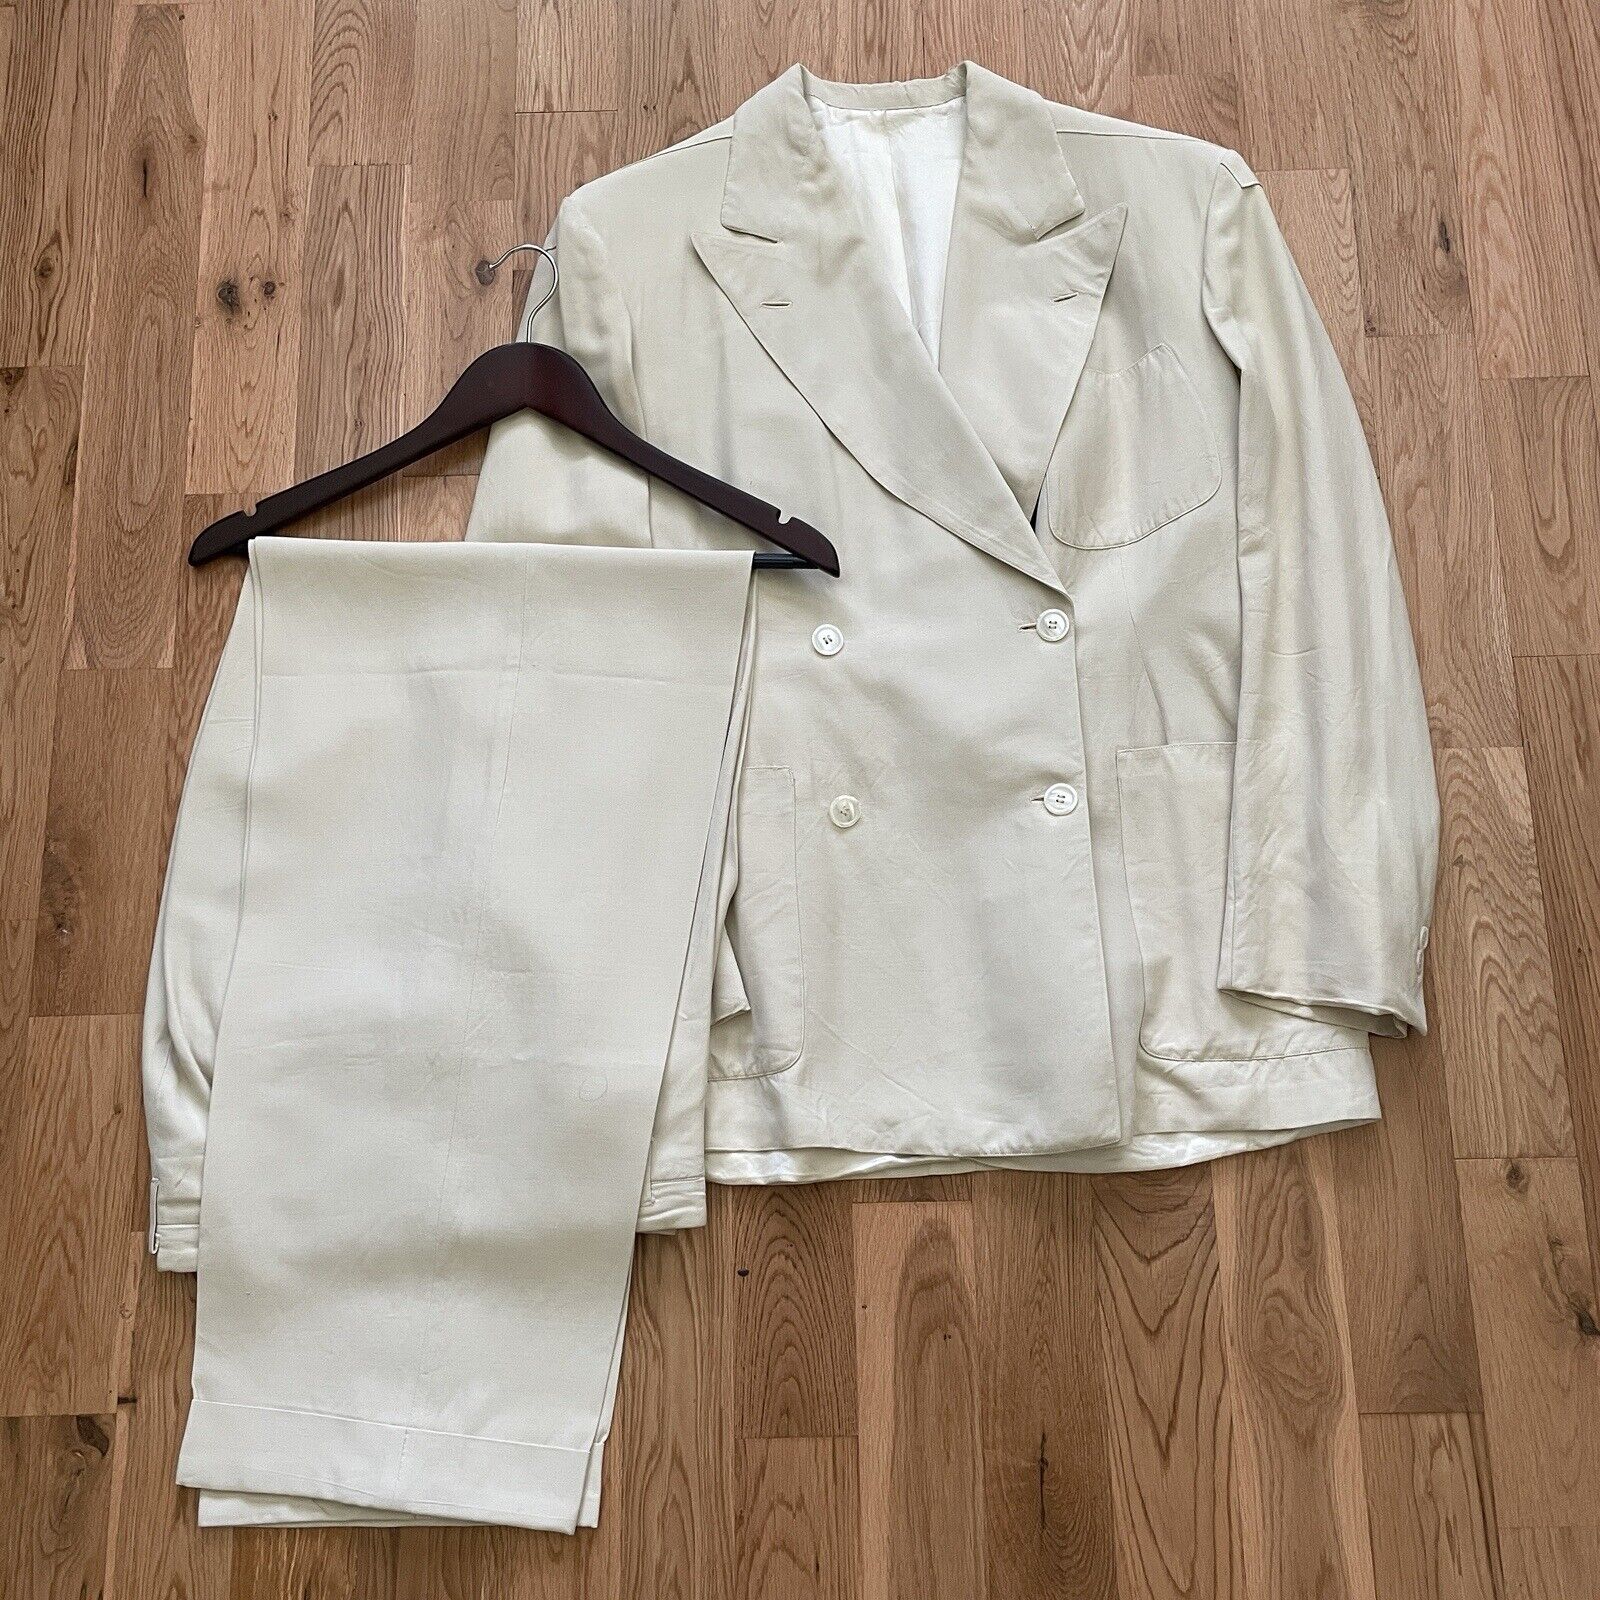 Vintage 1930s 1940s Desmond’s Double Breasted White Suit Trousers 28x31 Antique